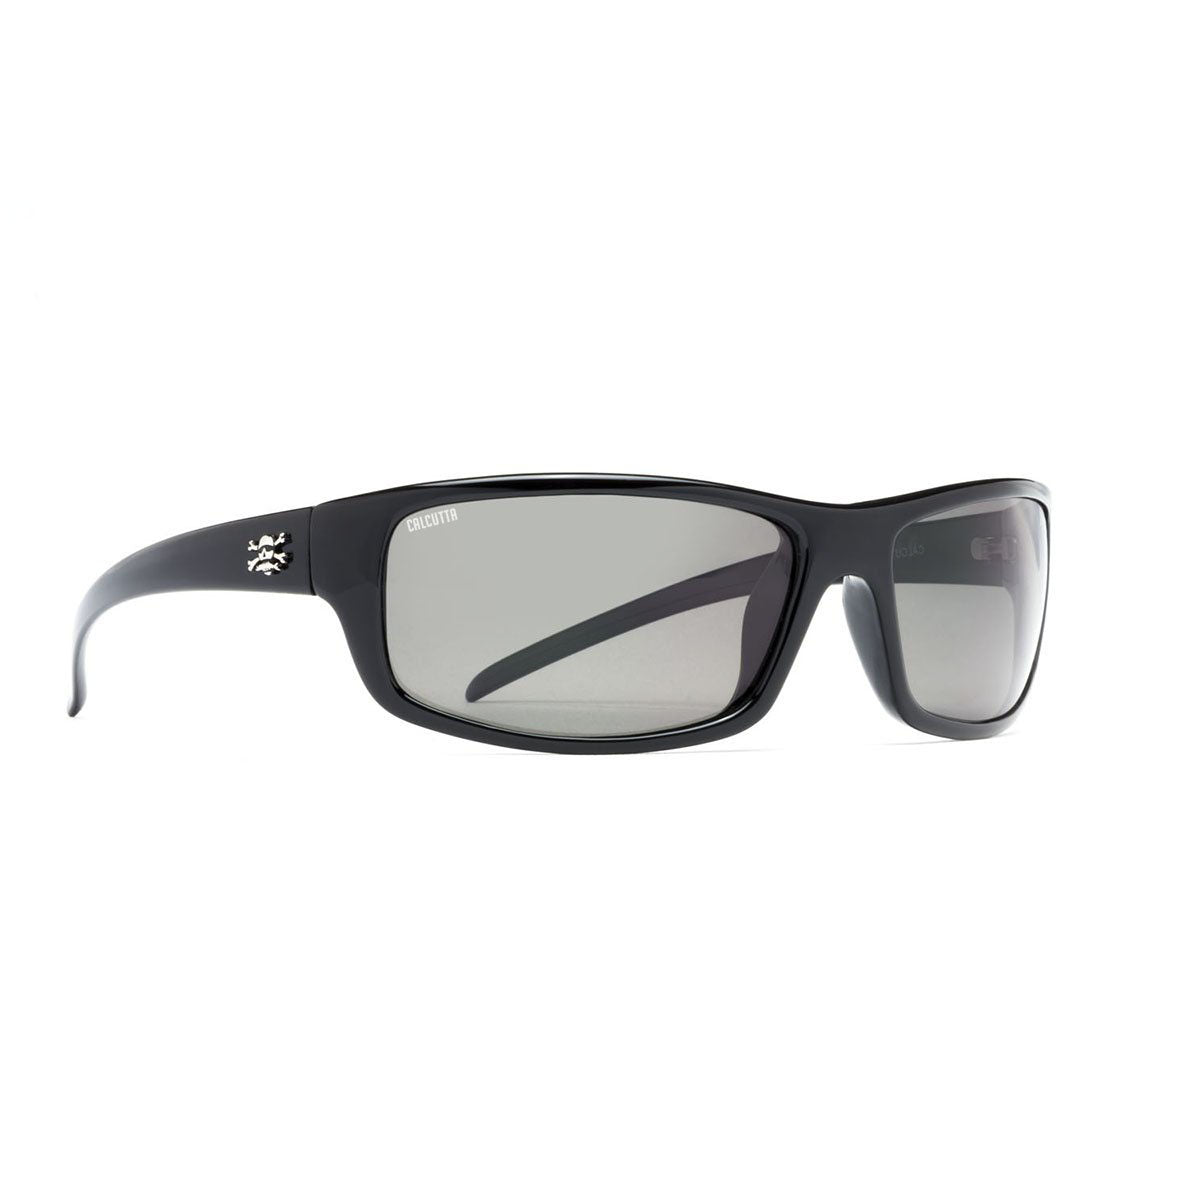 Calcutta Meads sunglasses black frame gray lens